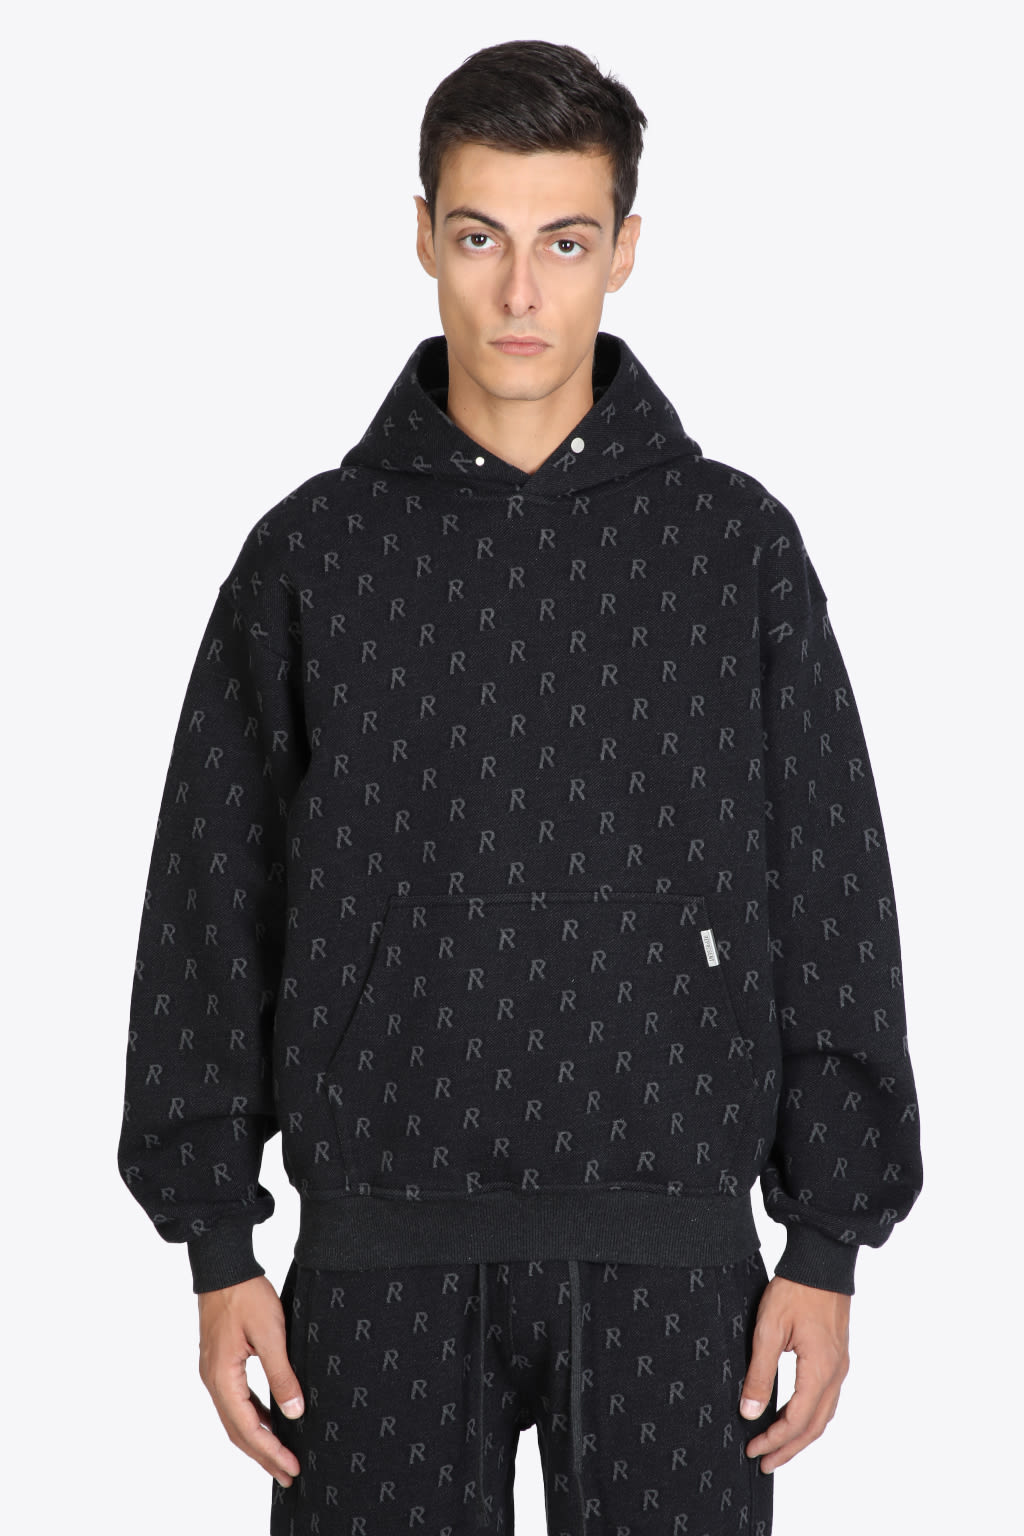 REPRESENT Intarsia Initial Hoodie Dark grey cotton knit hoodie with monogram pattern - Intarsia initial hoodie